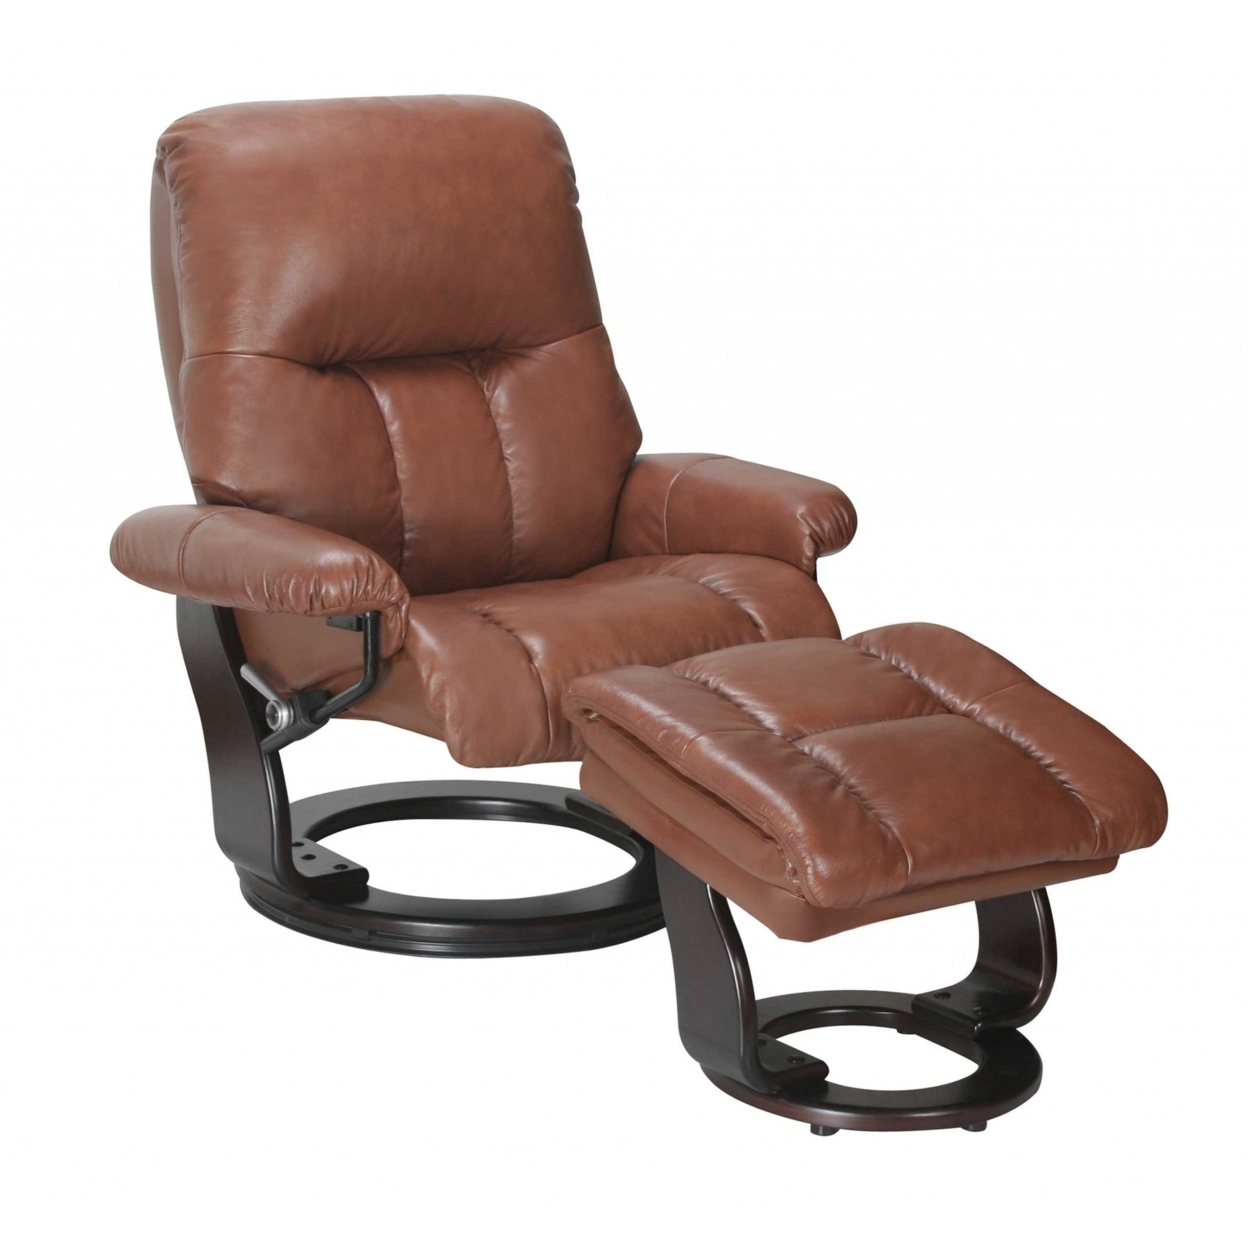 35" x 31" x 40.5" Llama Cover- Leather & Vinyl match Recliner Chair & Ottoman